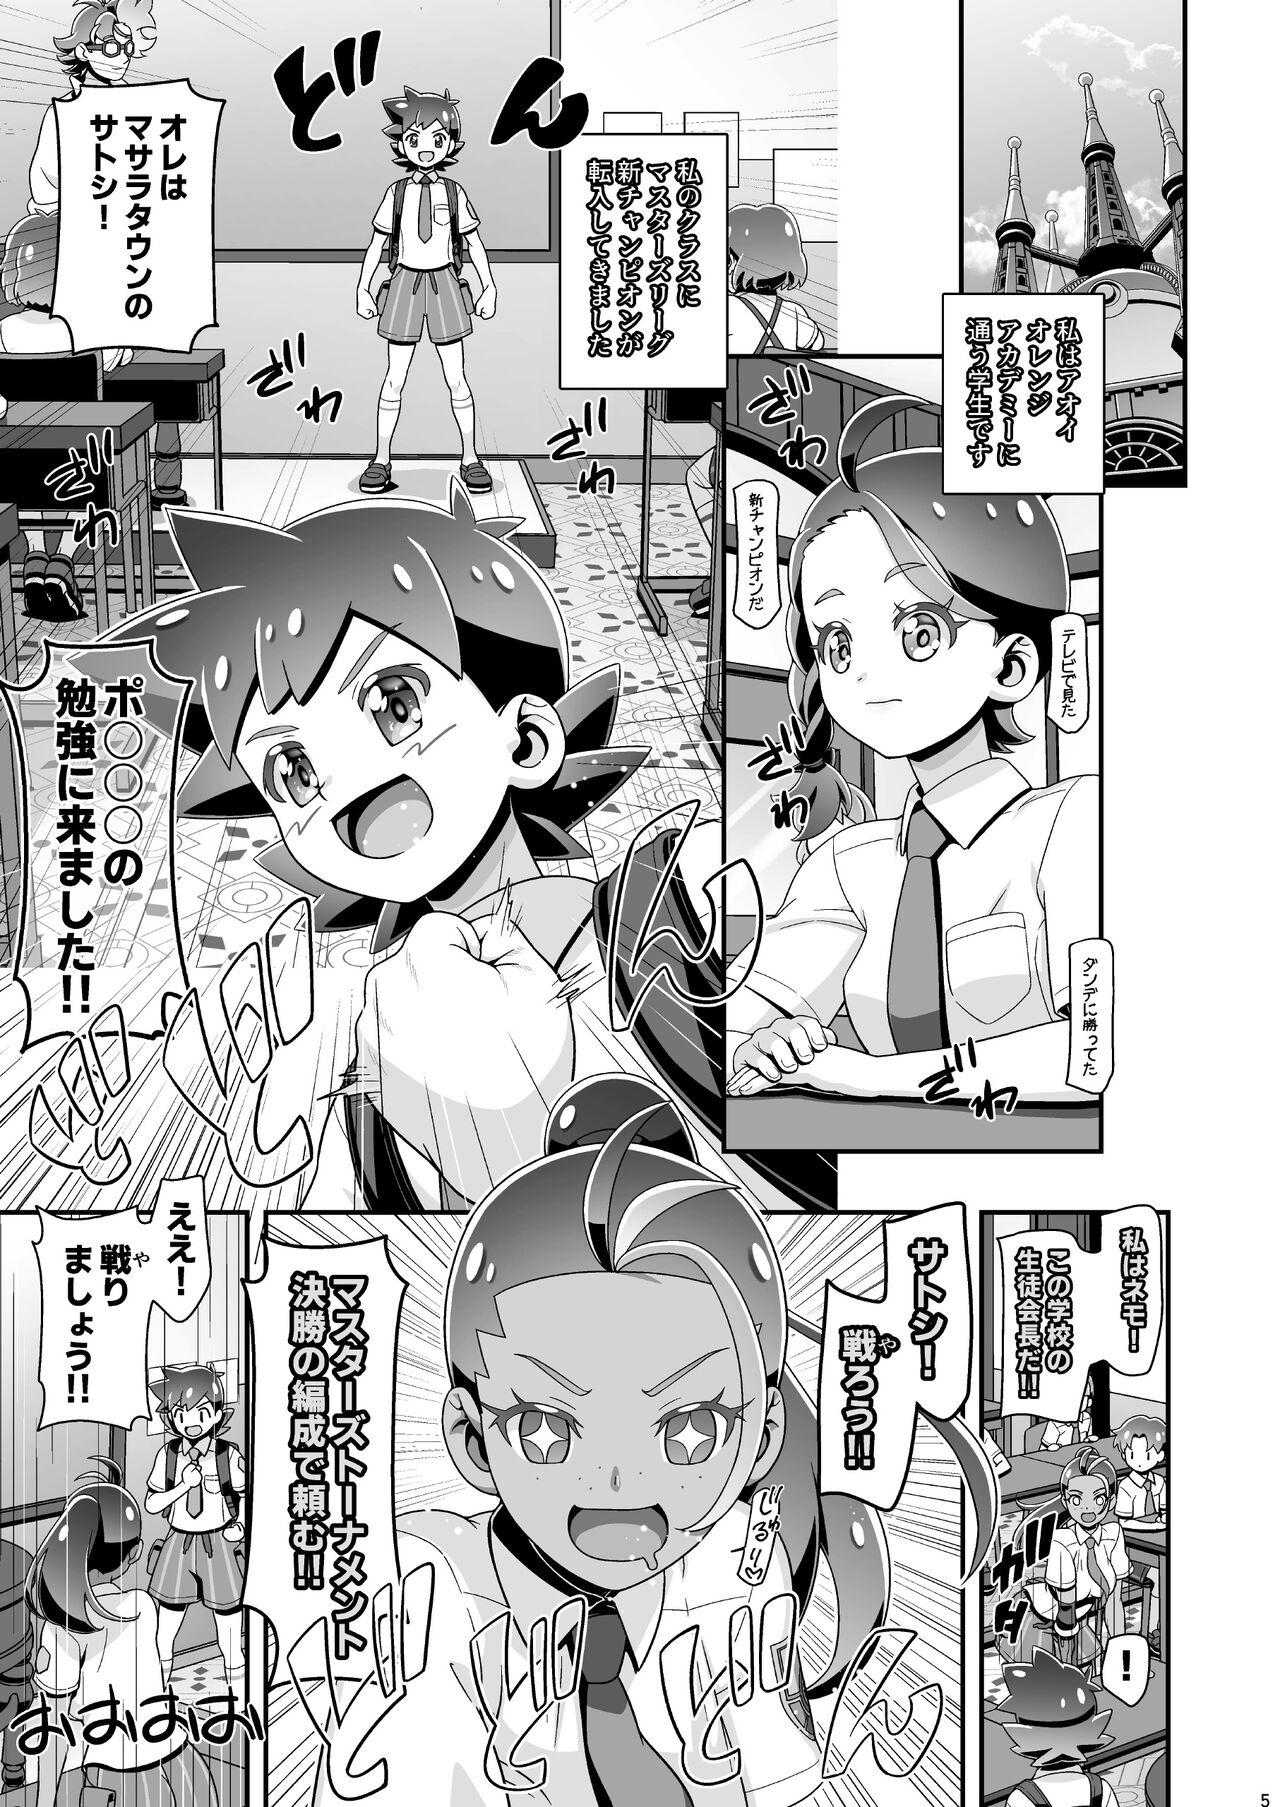 Futanari ] PM GALS SV Nemo & Aoi - Pokemon | pocket monsters Tease - Page 4